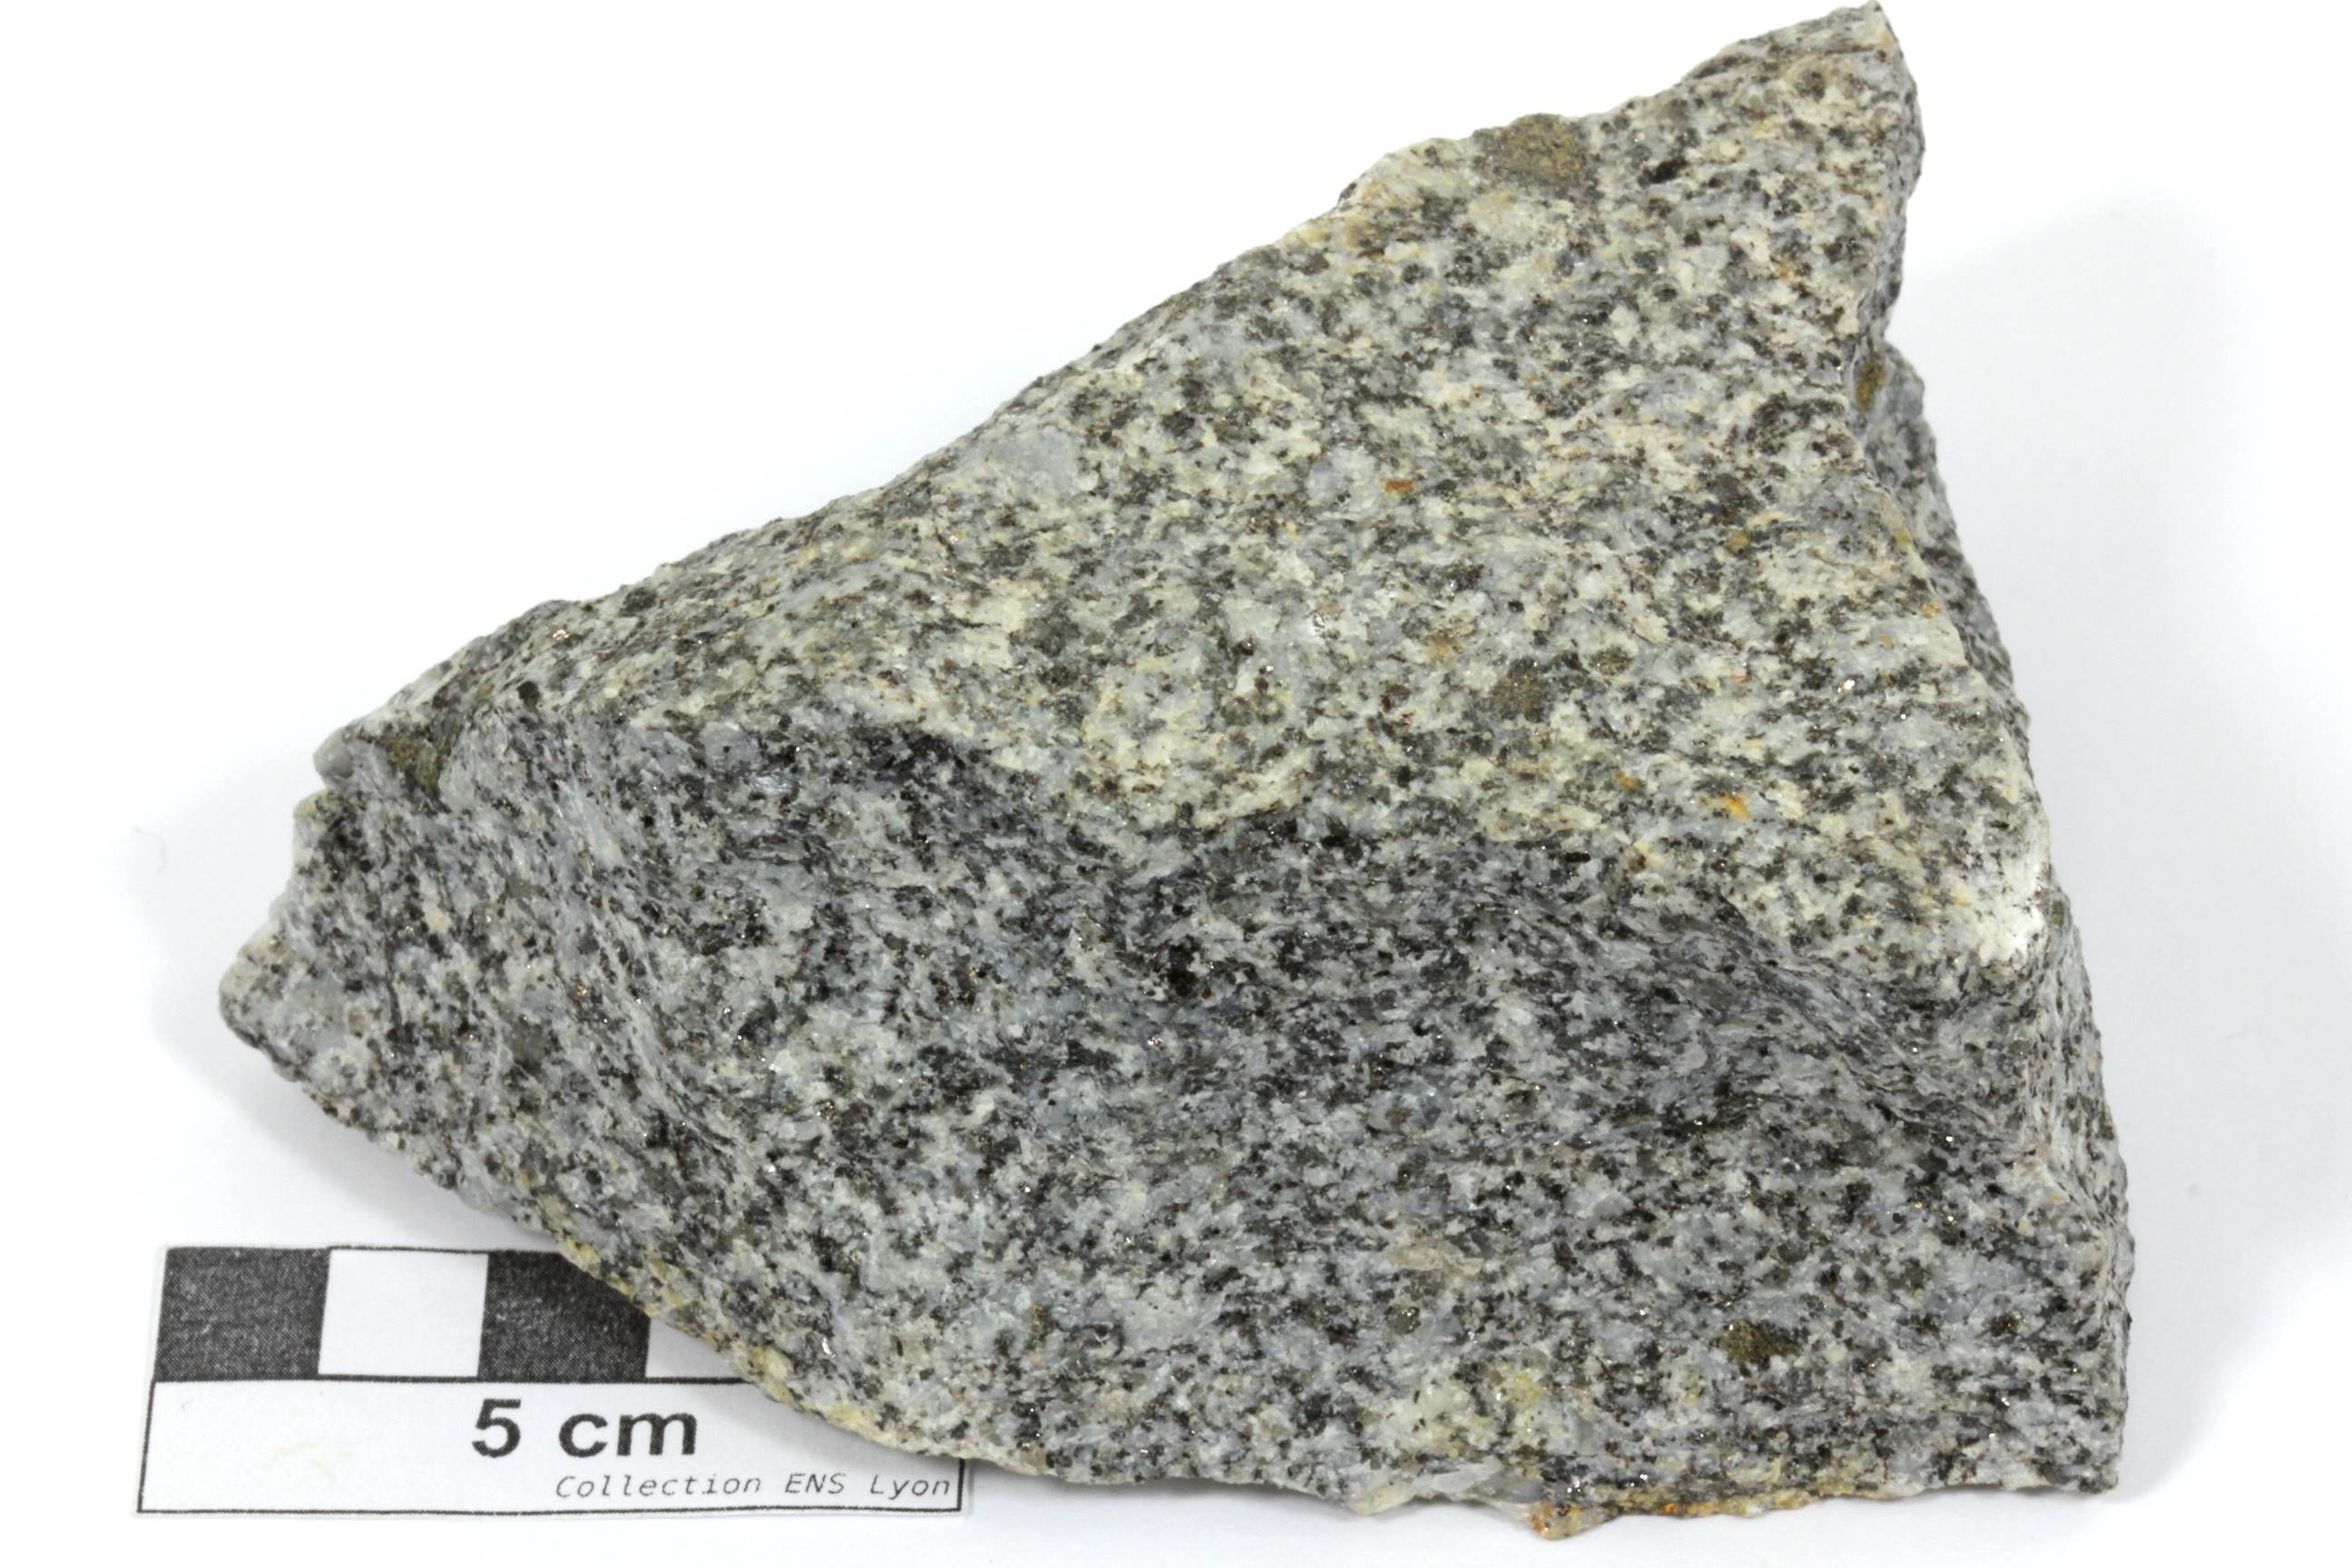 Granite à cordiérite Granite du Cloitre Massif armoricain  Huelgoat Le Cloitre